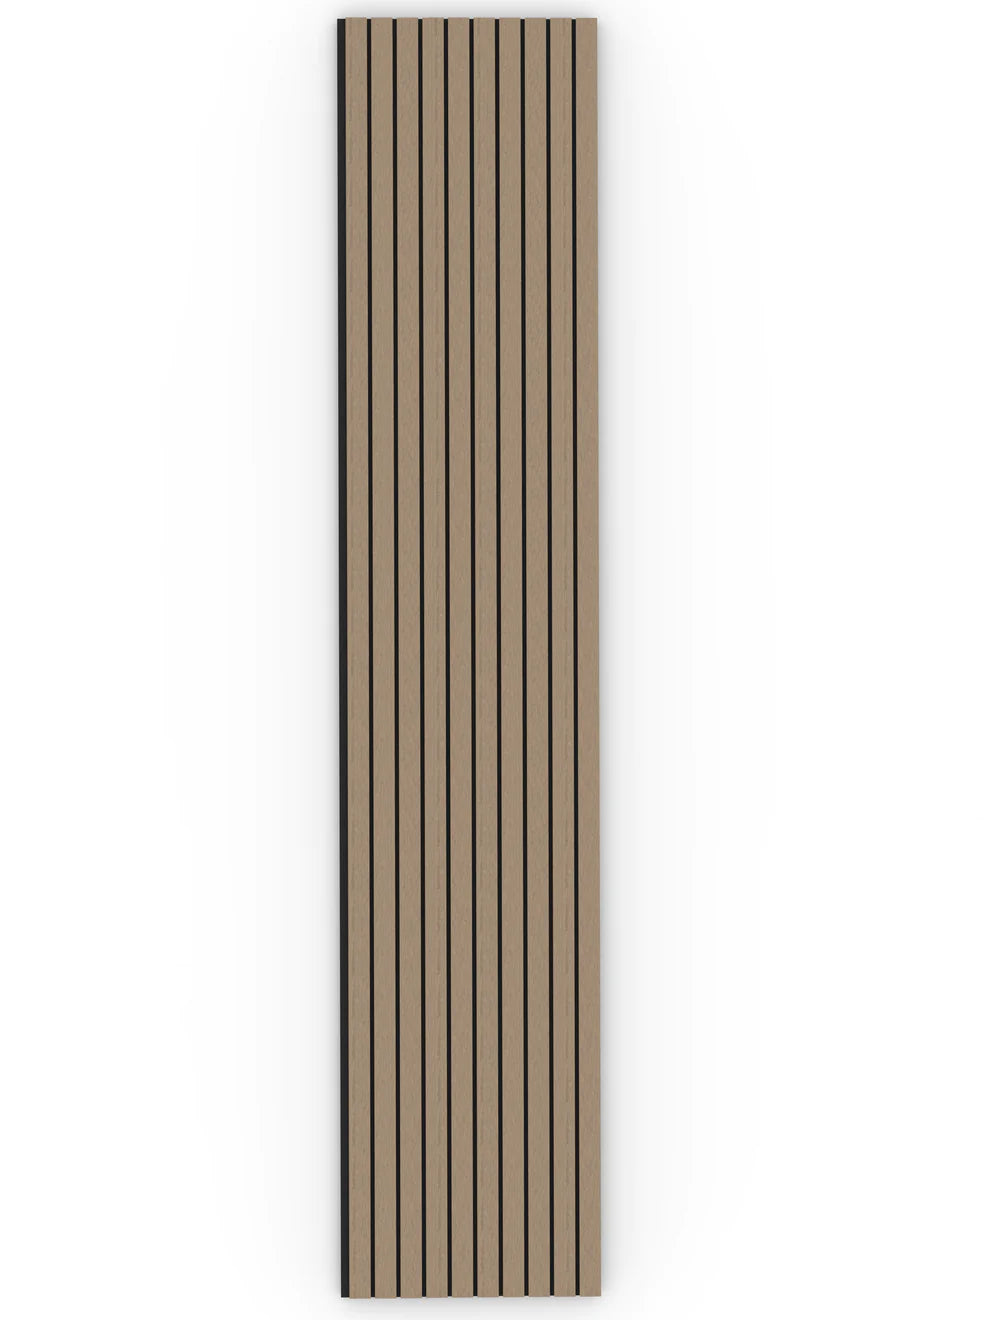 Walnut Acoustic Wood Wall Panels | Series 2 - 240x60cm